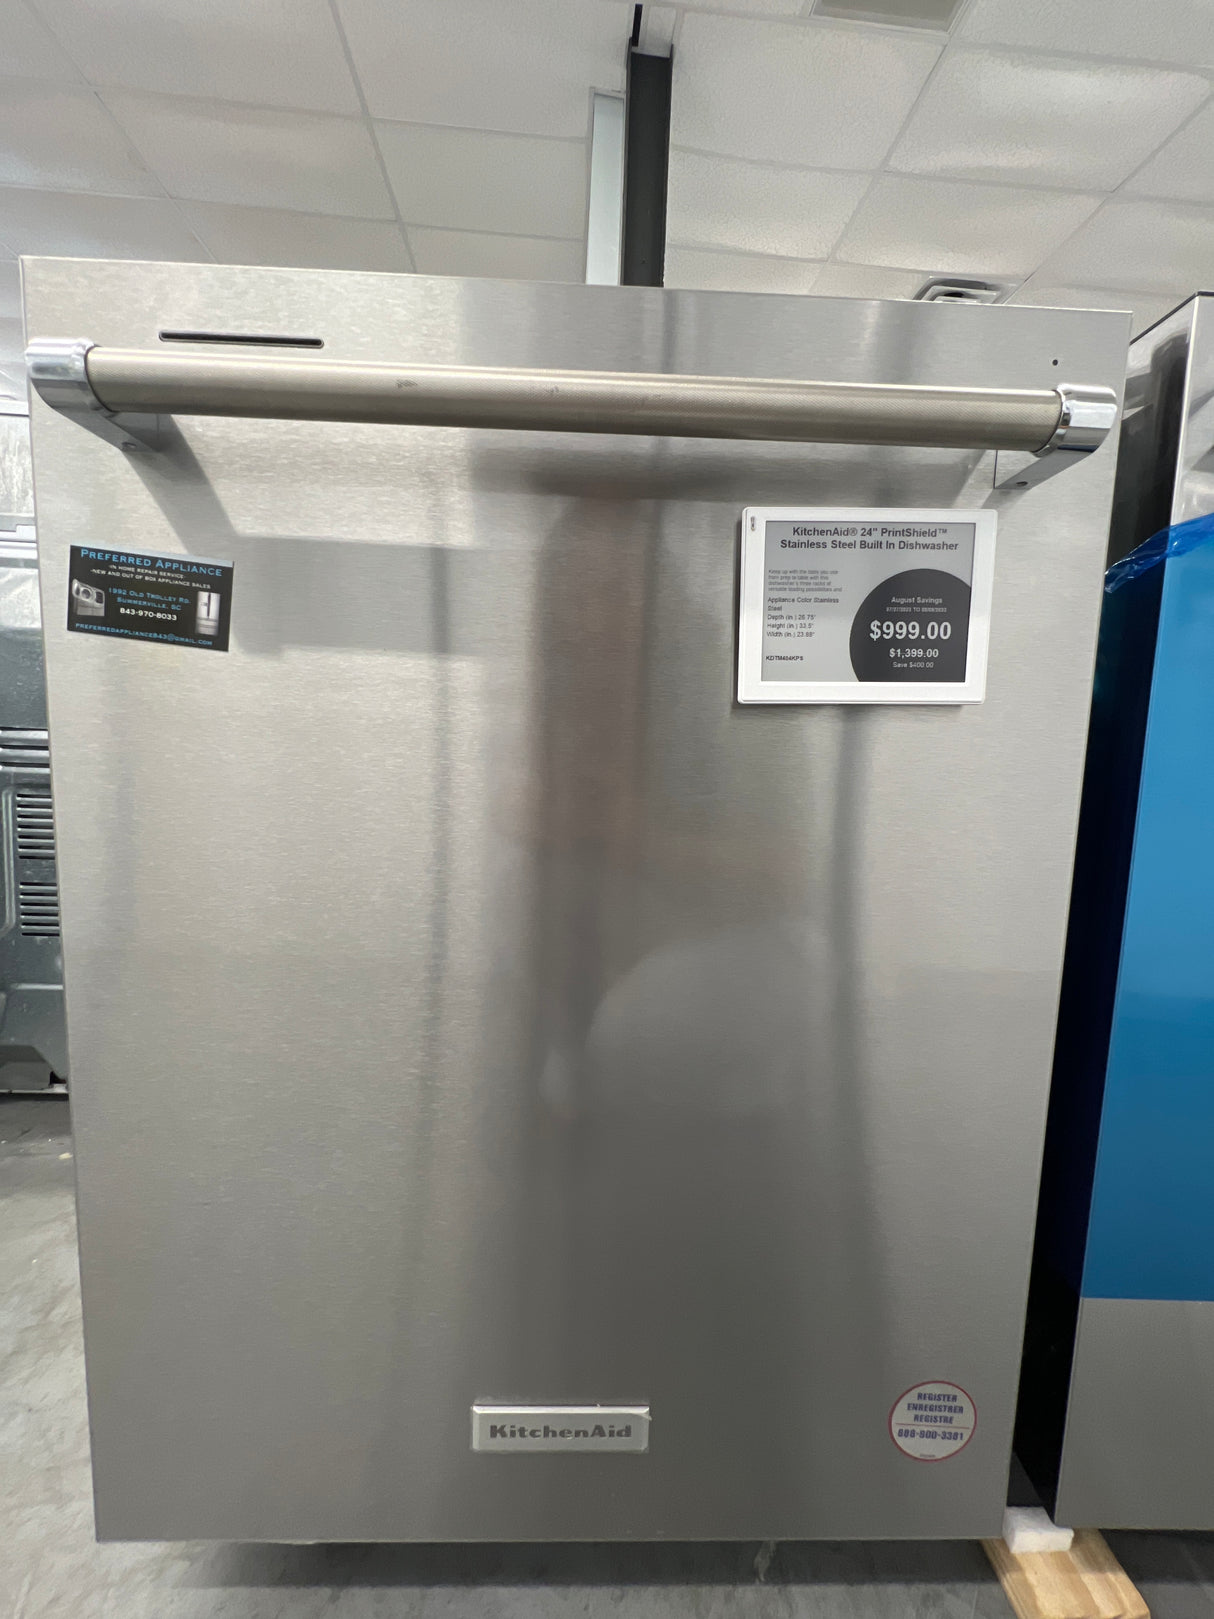 KDTM404KPS kitchenAid 24 inch print shield stainless steel built-in dishwasher